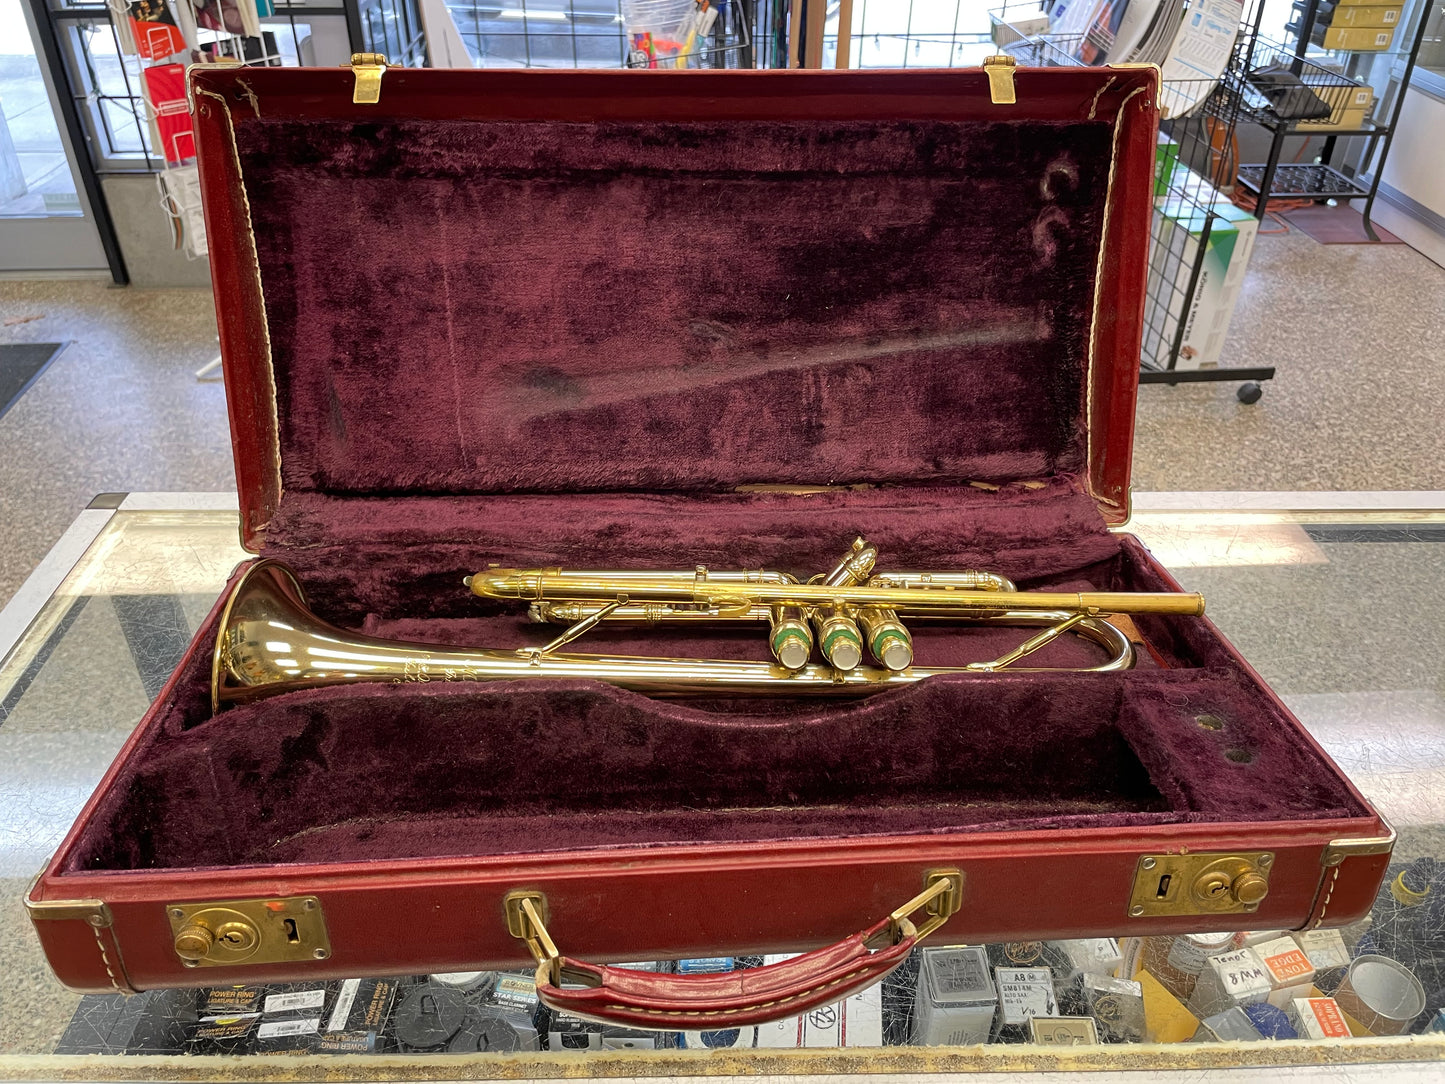 Pre-Owned Olds Mendez Trumpet - 1963